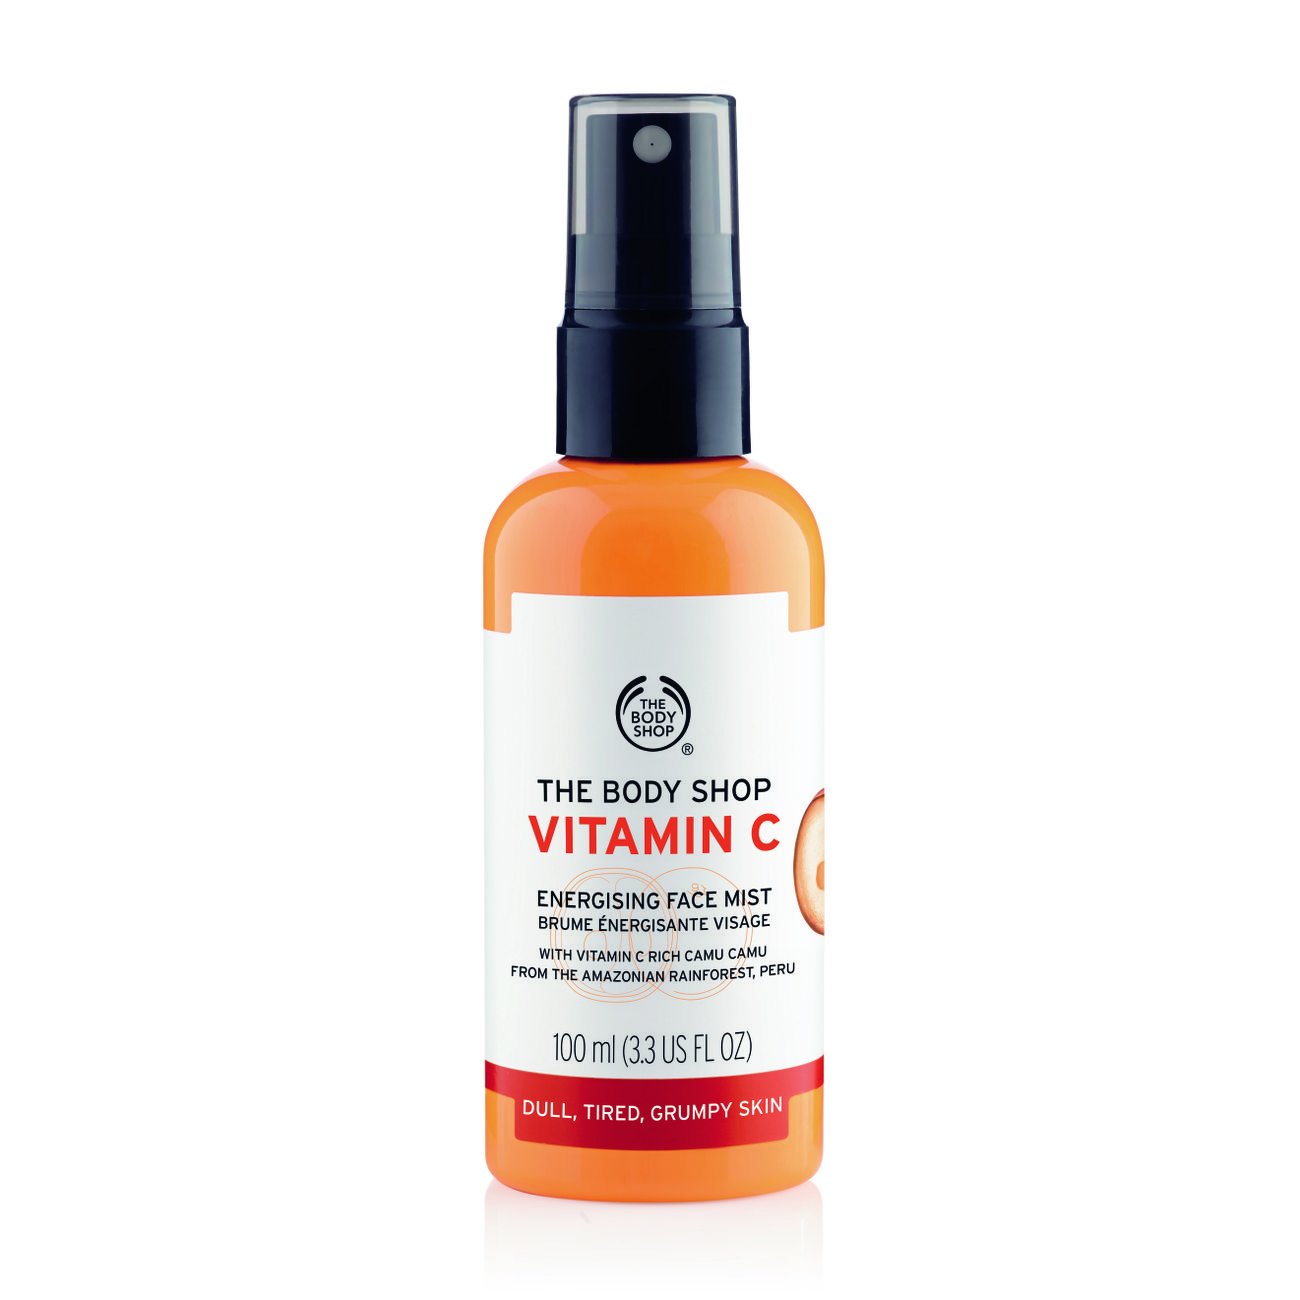 The Body Shop Vitamin C Skin Boost Serum - 14 Best Face Serum for Anti-Ageing, Hydrating & Skin Renewal in India